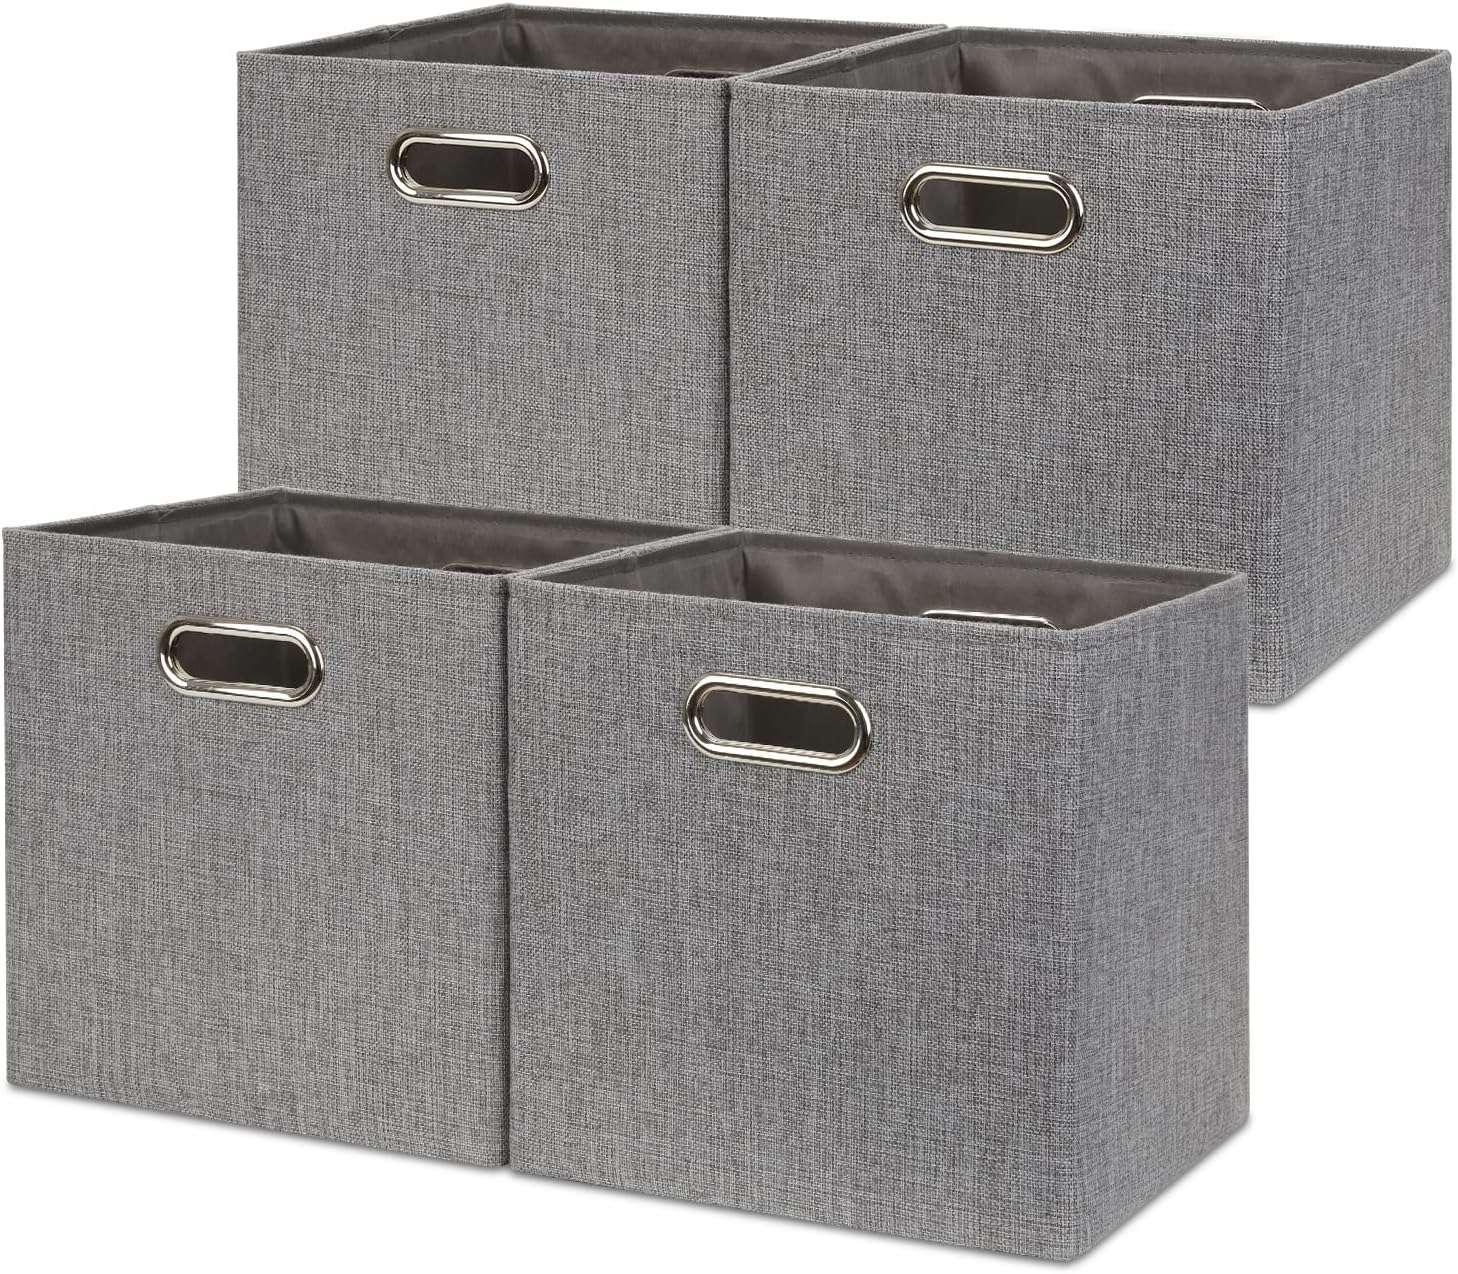 Temary Fabric Cube Storage Organizer Bins 4 Pack Decorative Canvas Storage Baskets Storage Cubes 11x11, Foldable Storage Cube Bins for Home, Closet, Shelves, Nursery (Grey)